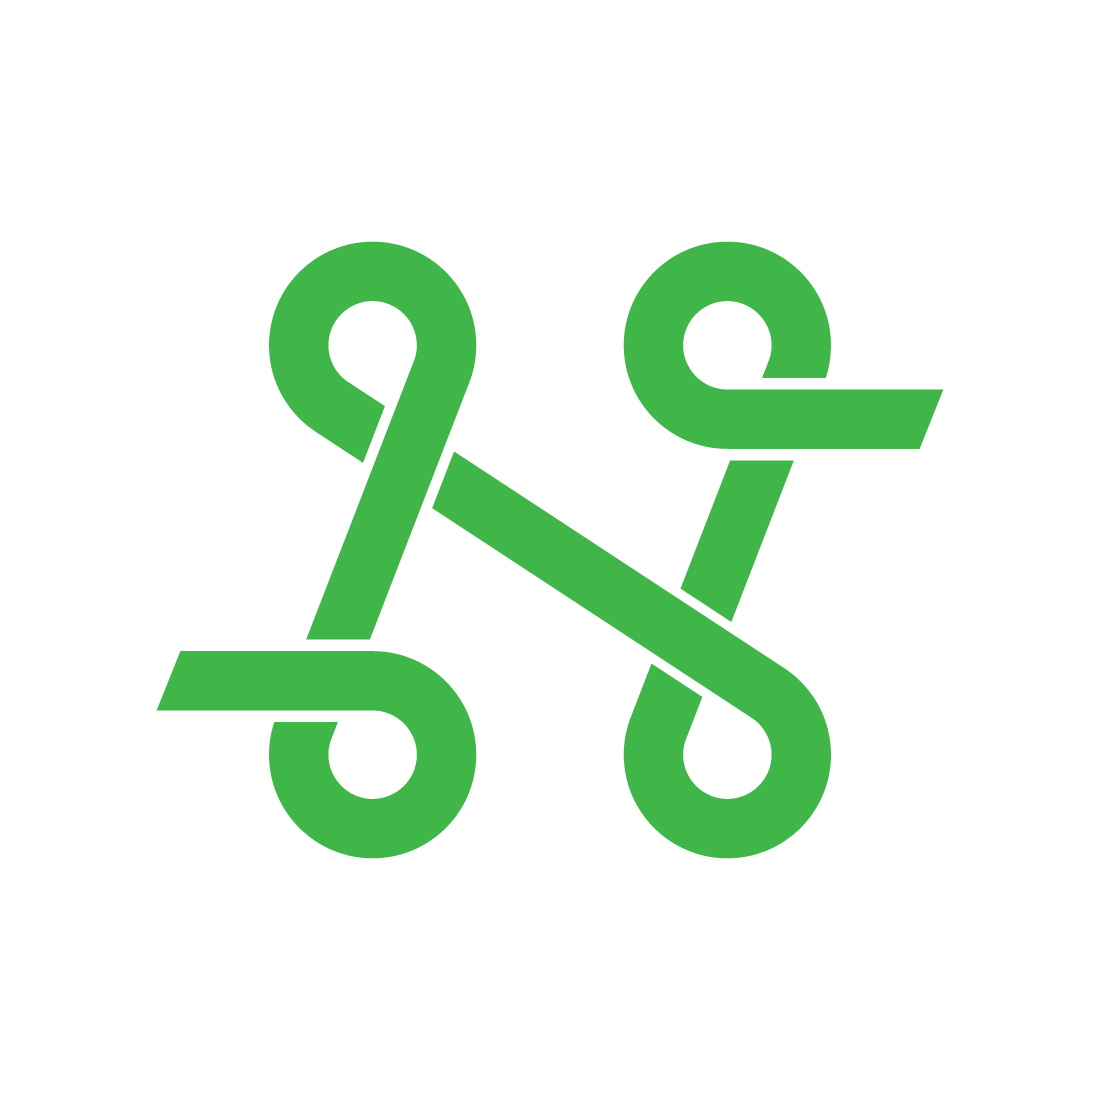 N Letter Logo cover image.